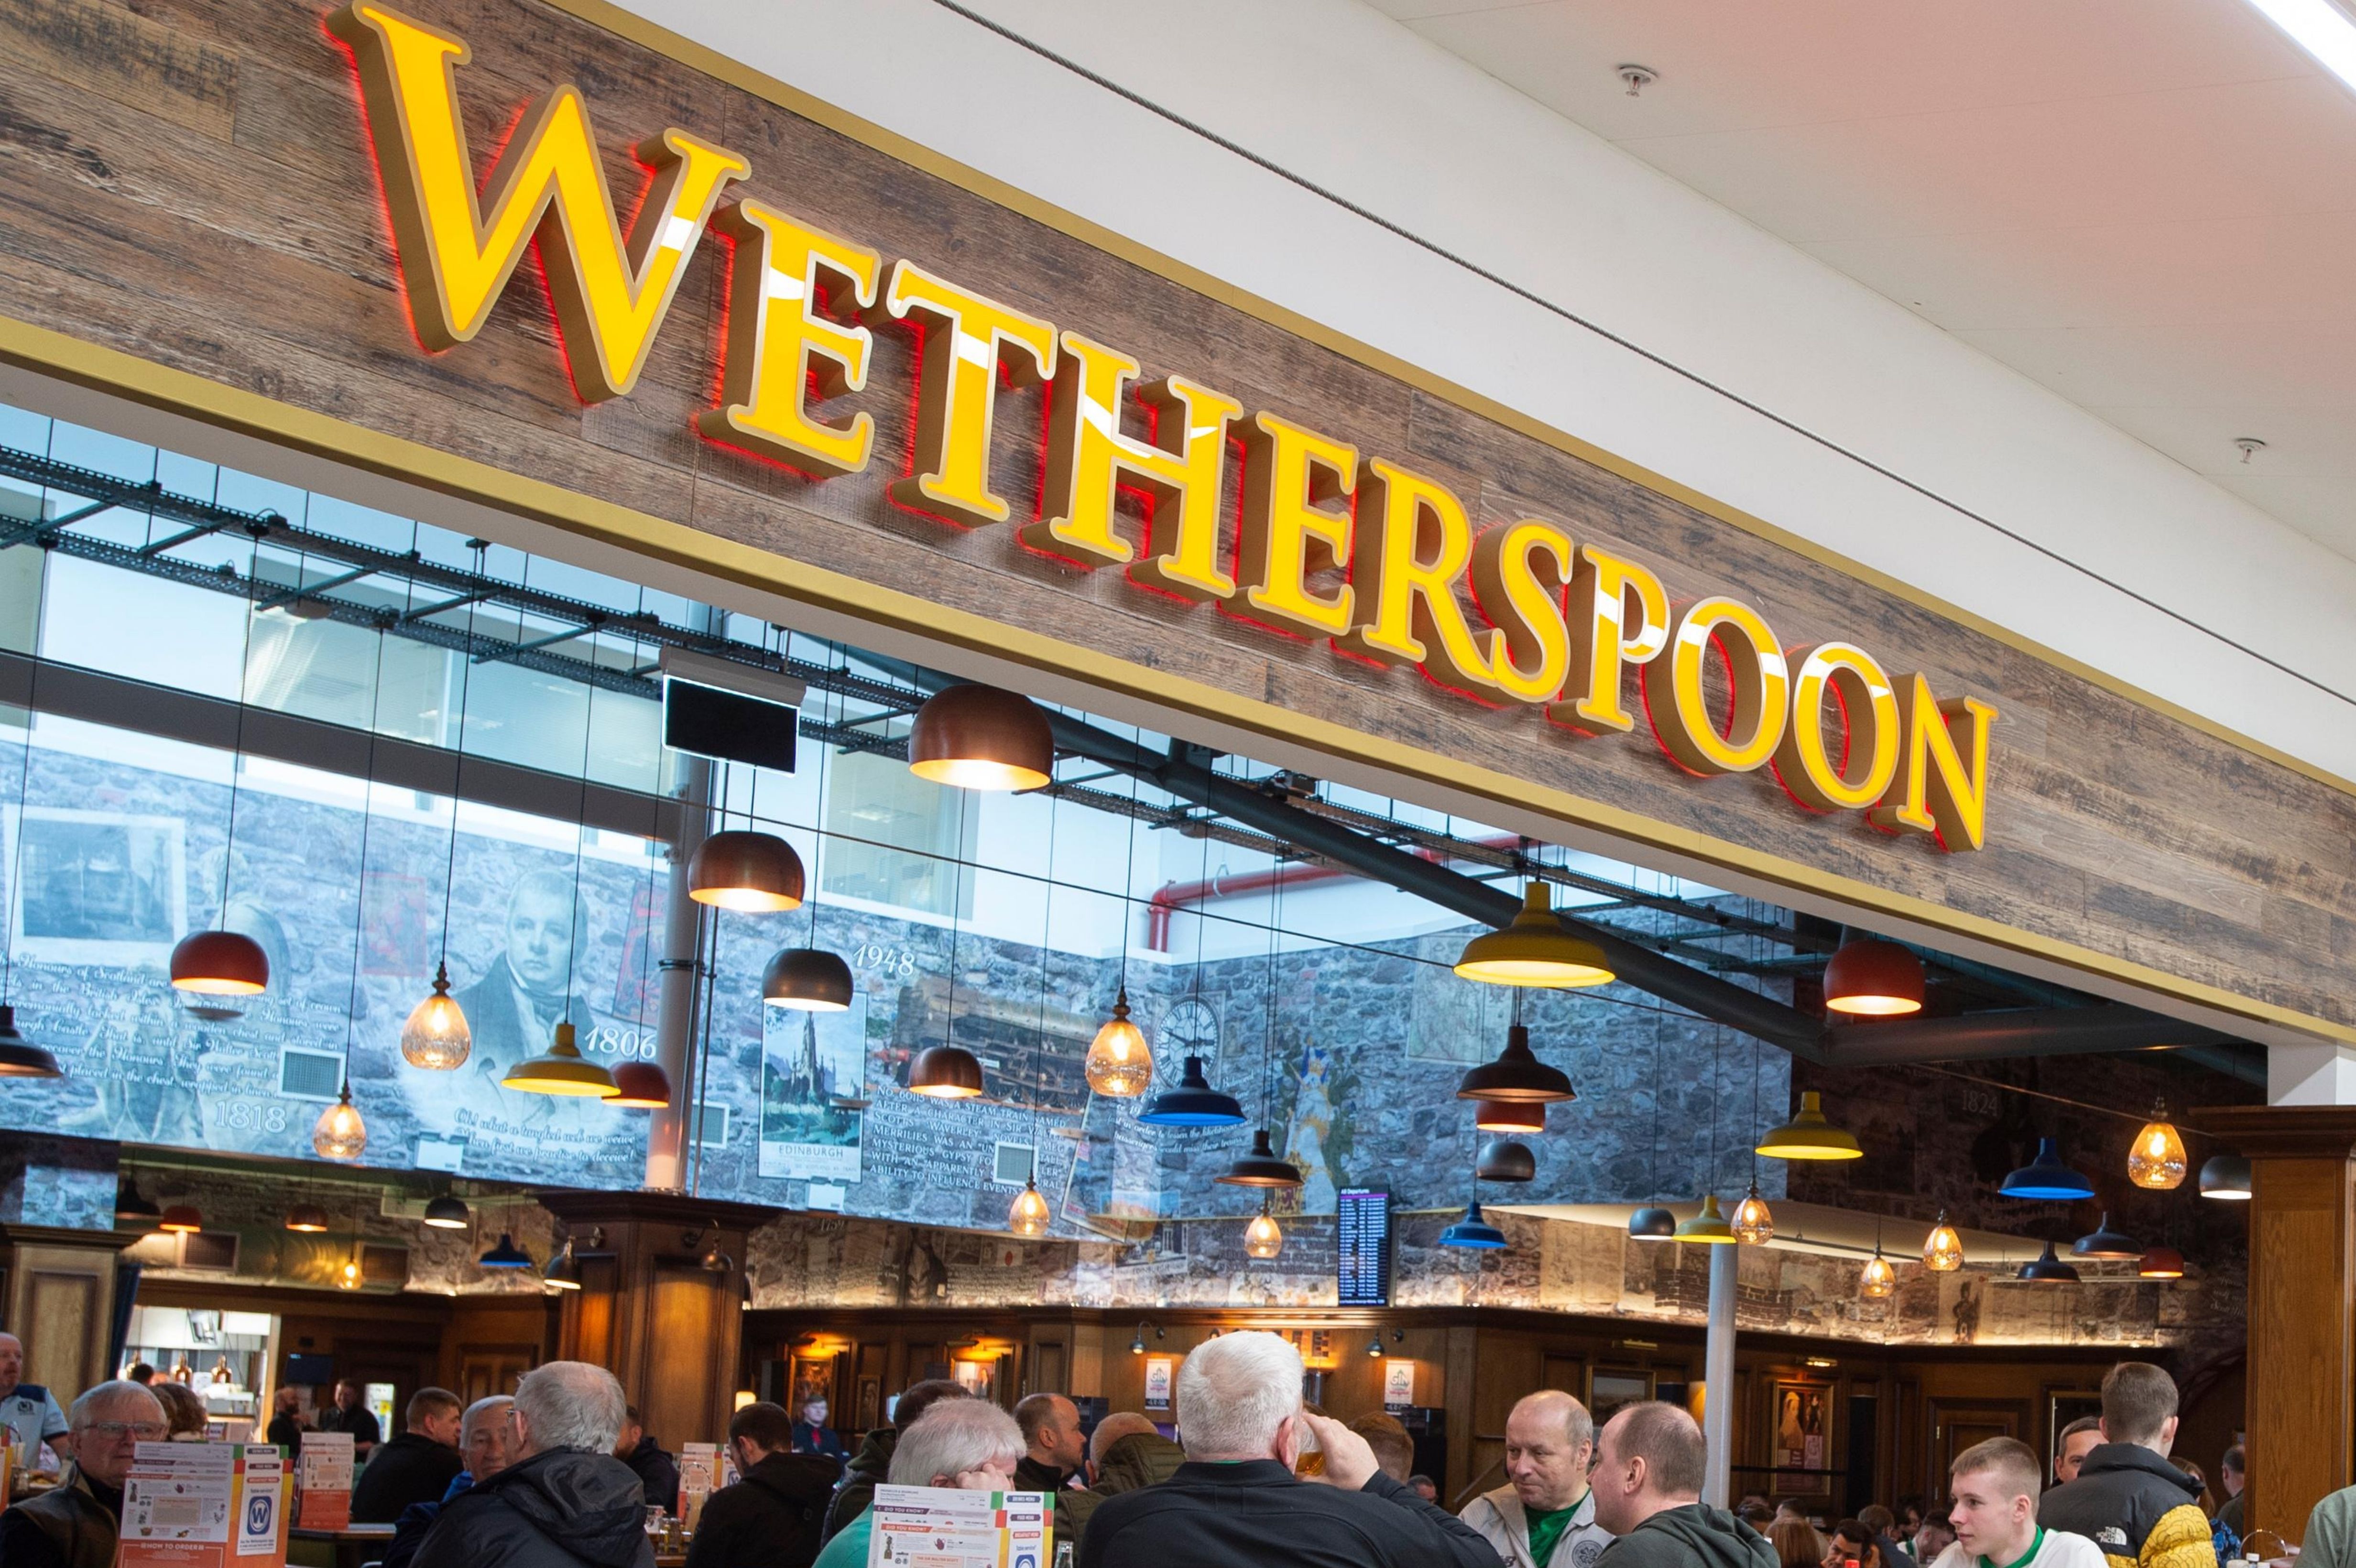 Wetherspoon - The Sir Walter Scott